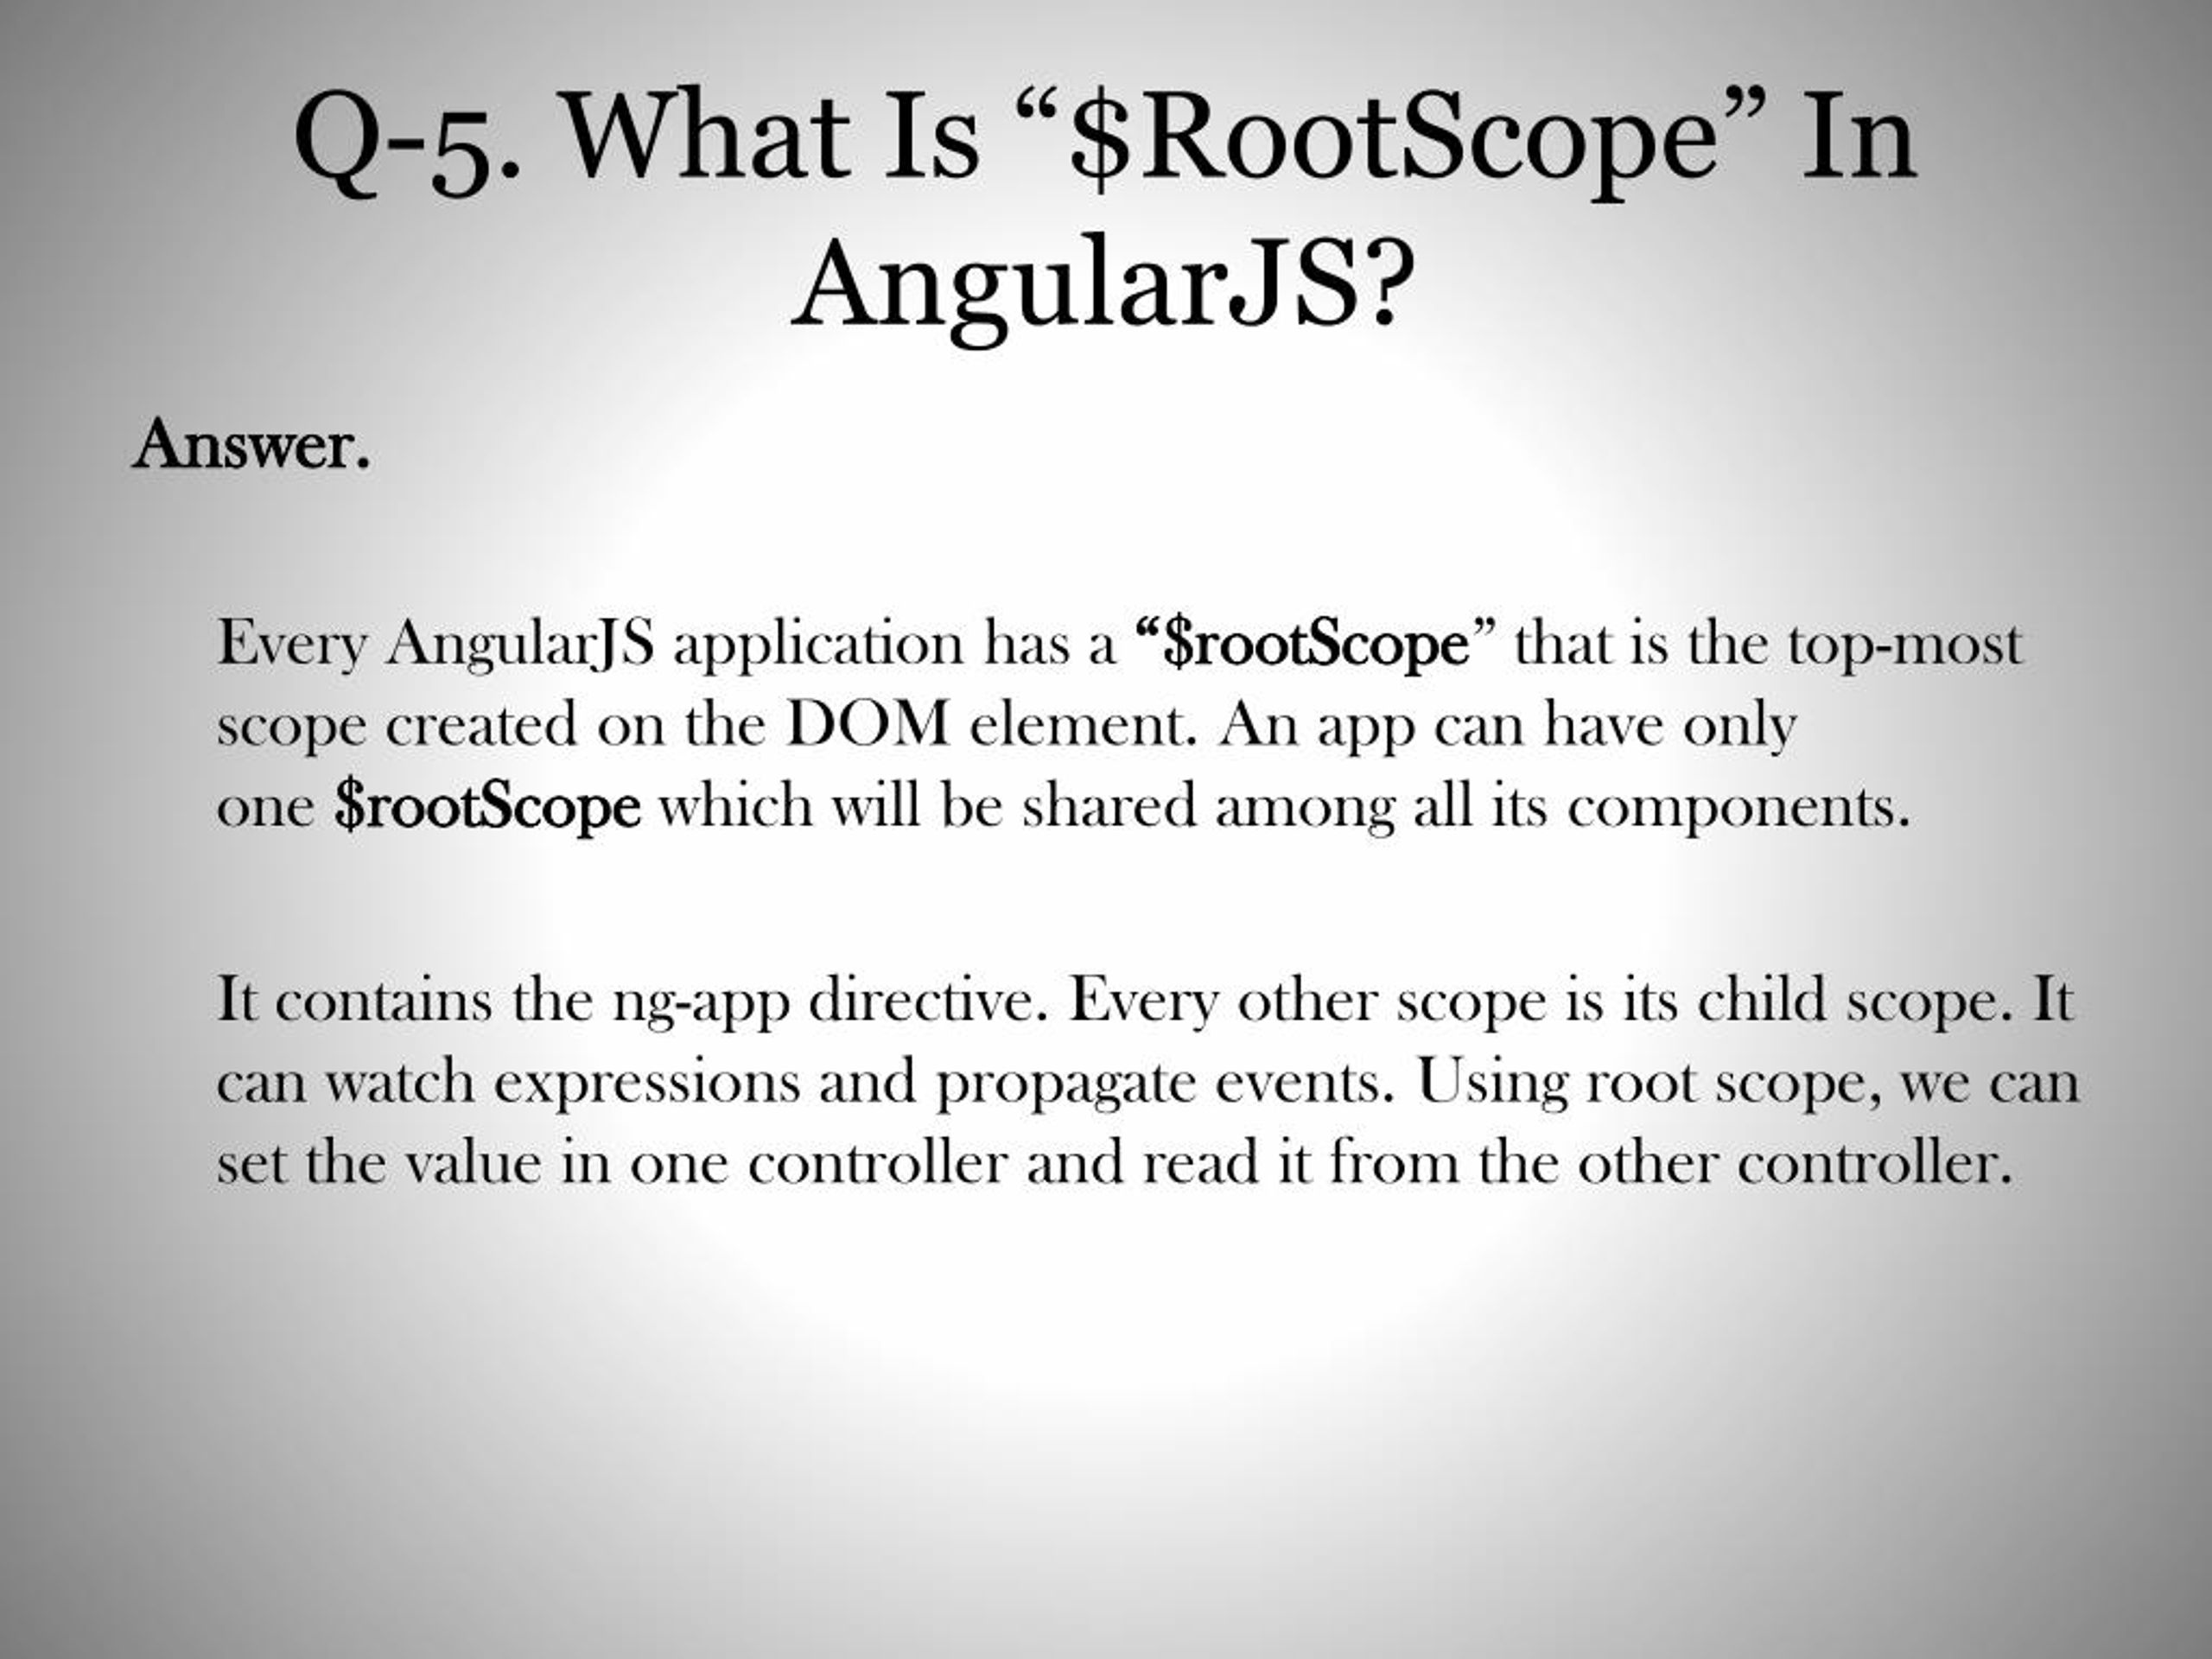 Angularjs scope lifecycle